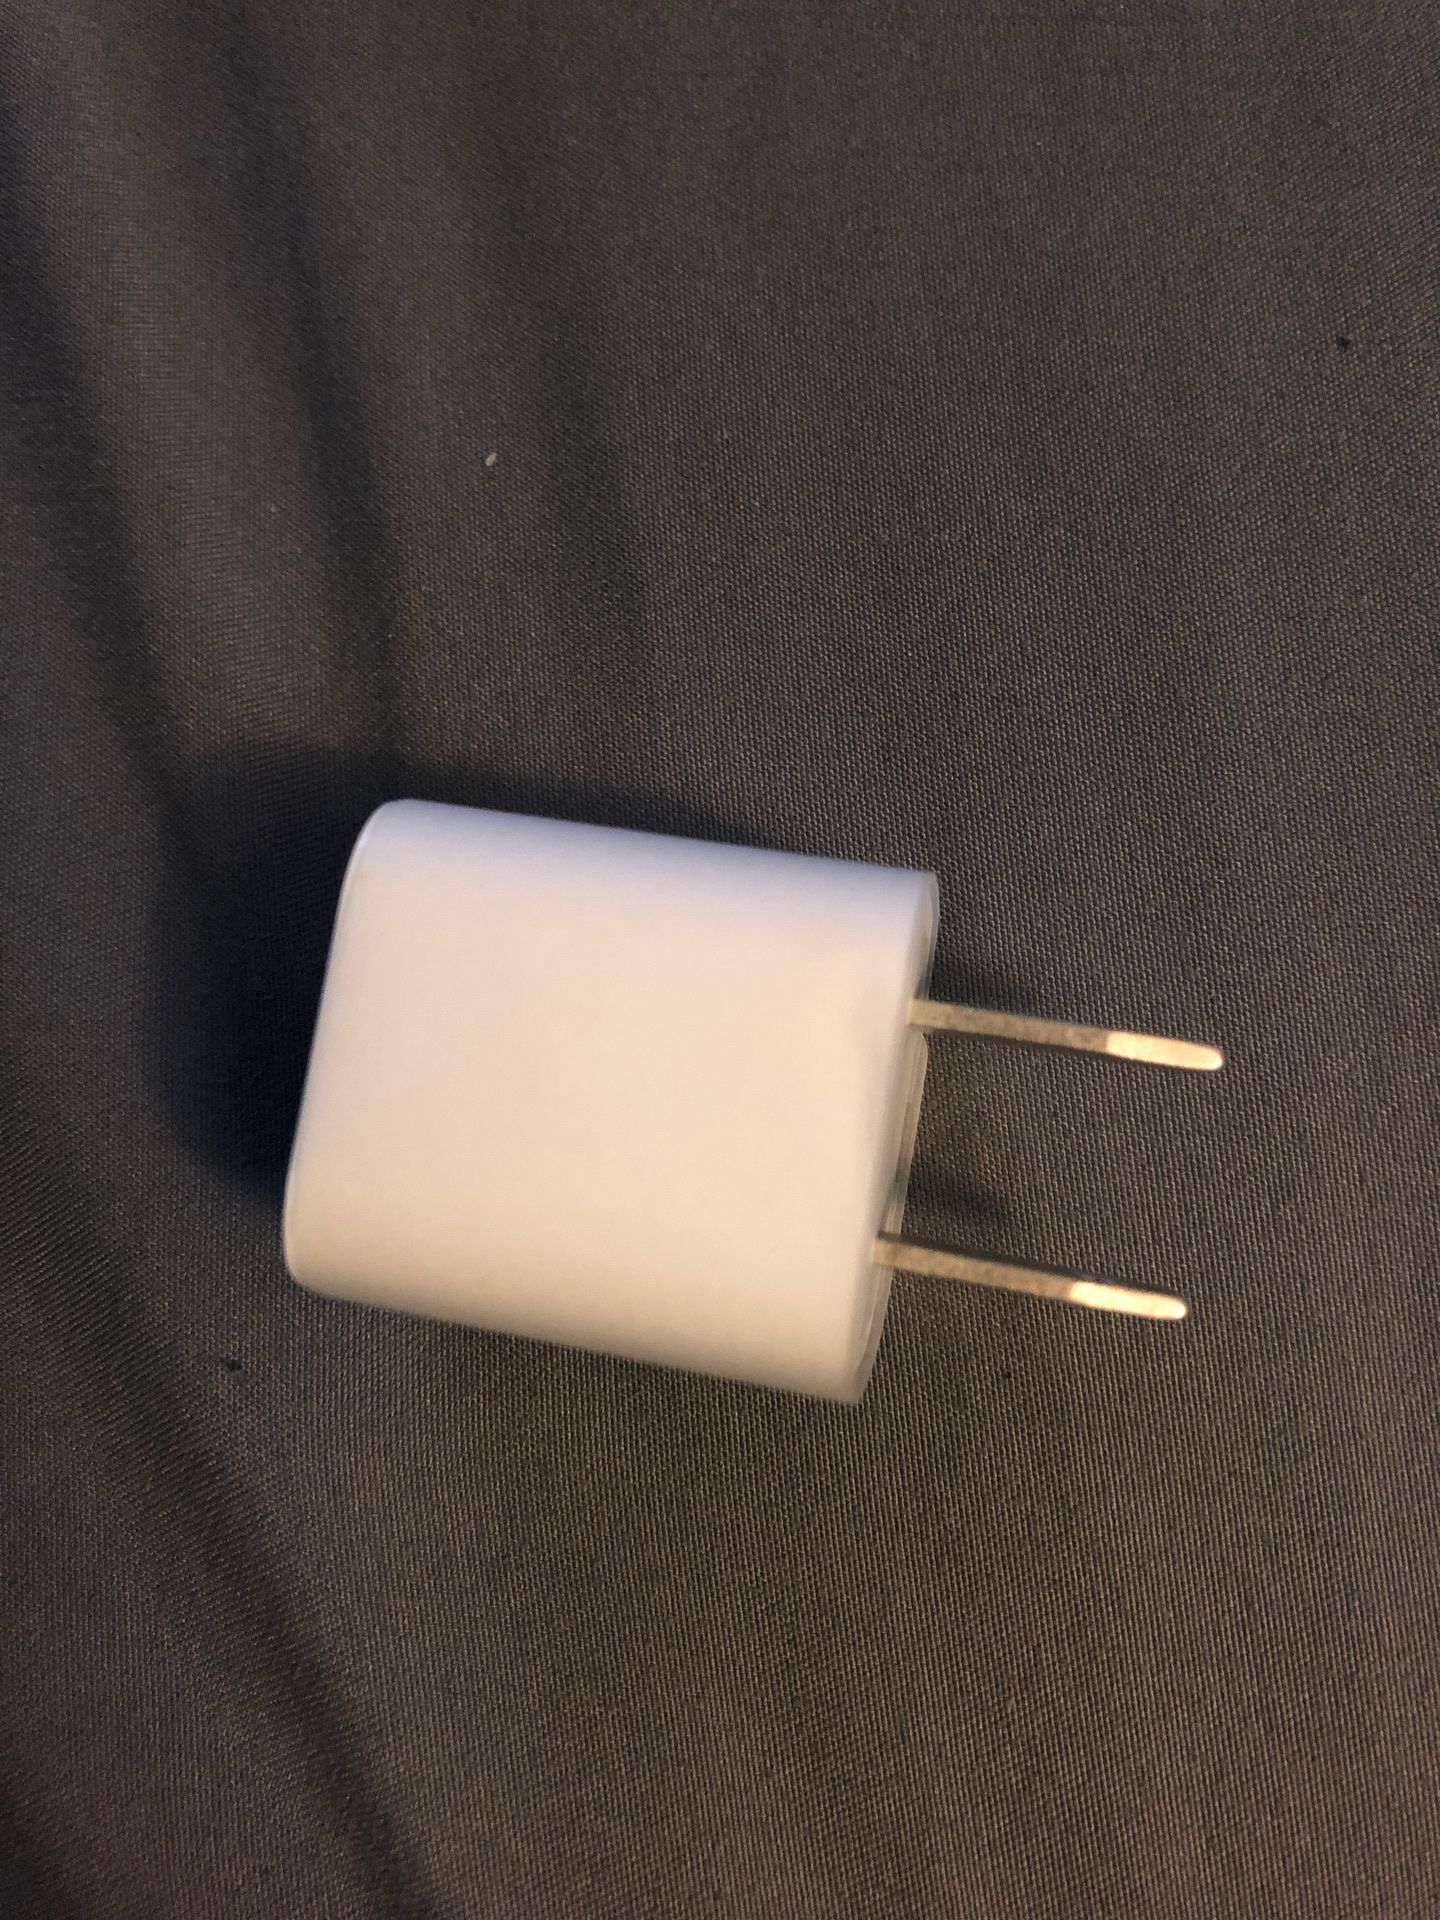 Apple connector